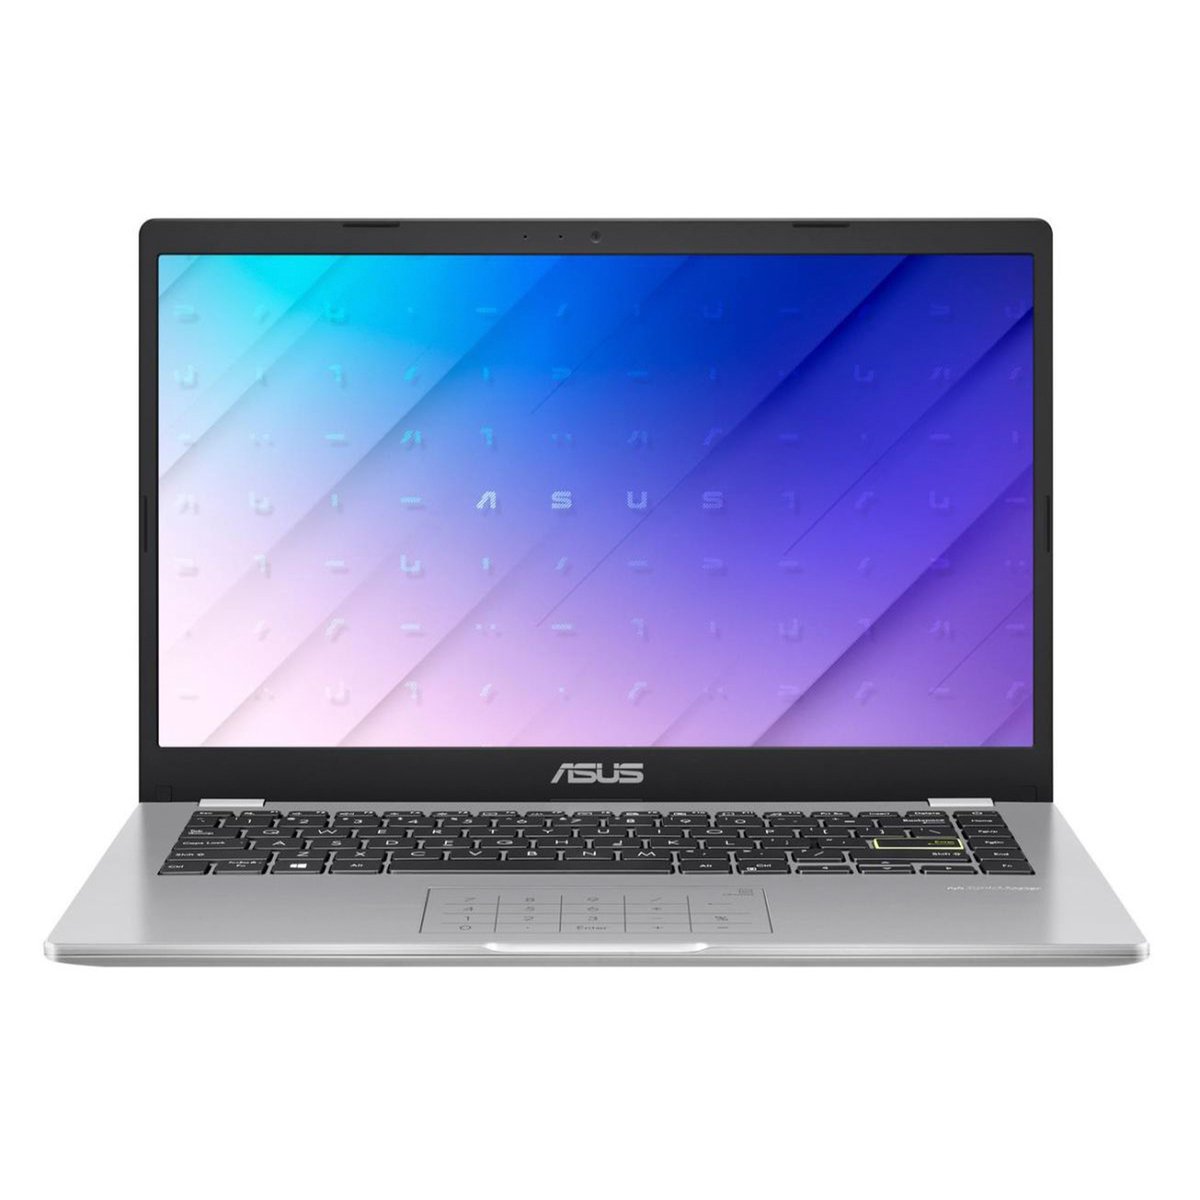 Asus Notebook E410MA-EK047T,Intel Celeron N4020,4GB RAM,512GB SSD,Intel UHD Graphics 600,14" HD WXGA LED Display,Windows 10,White